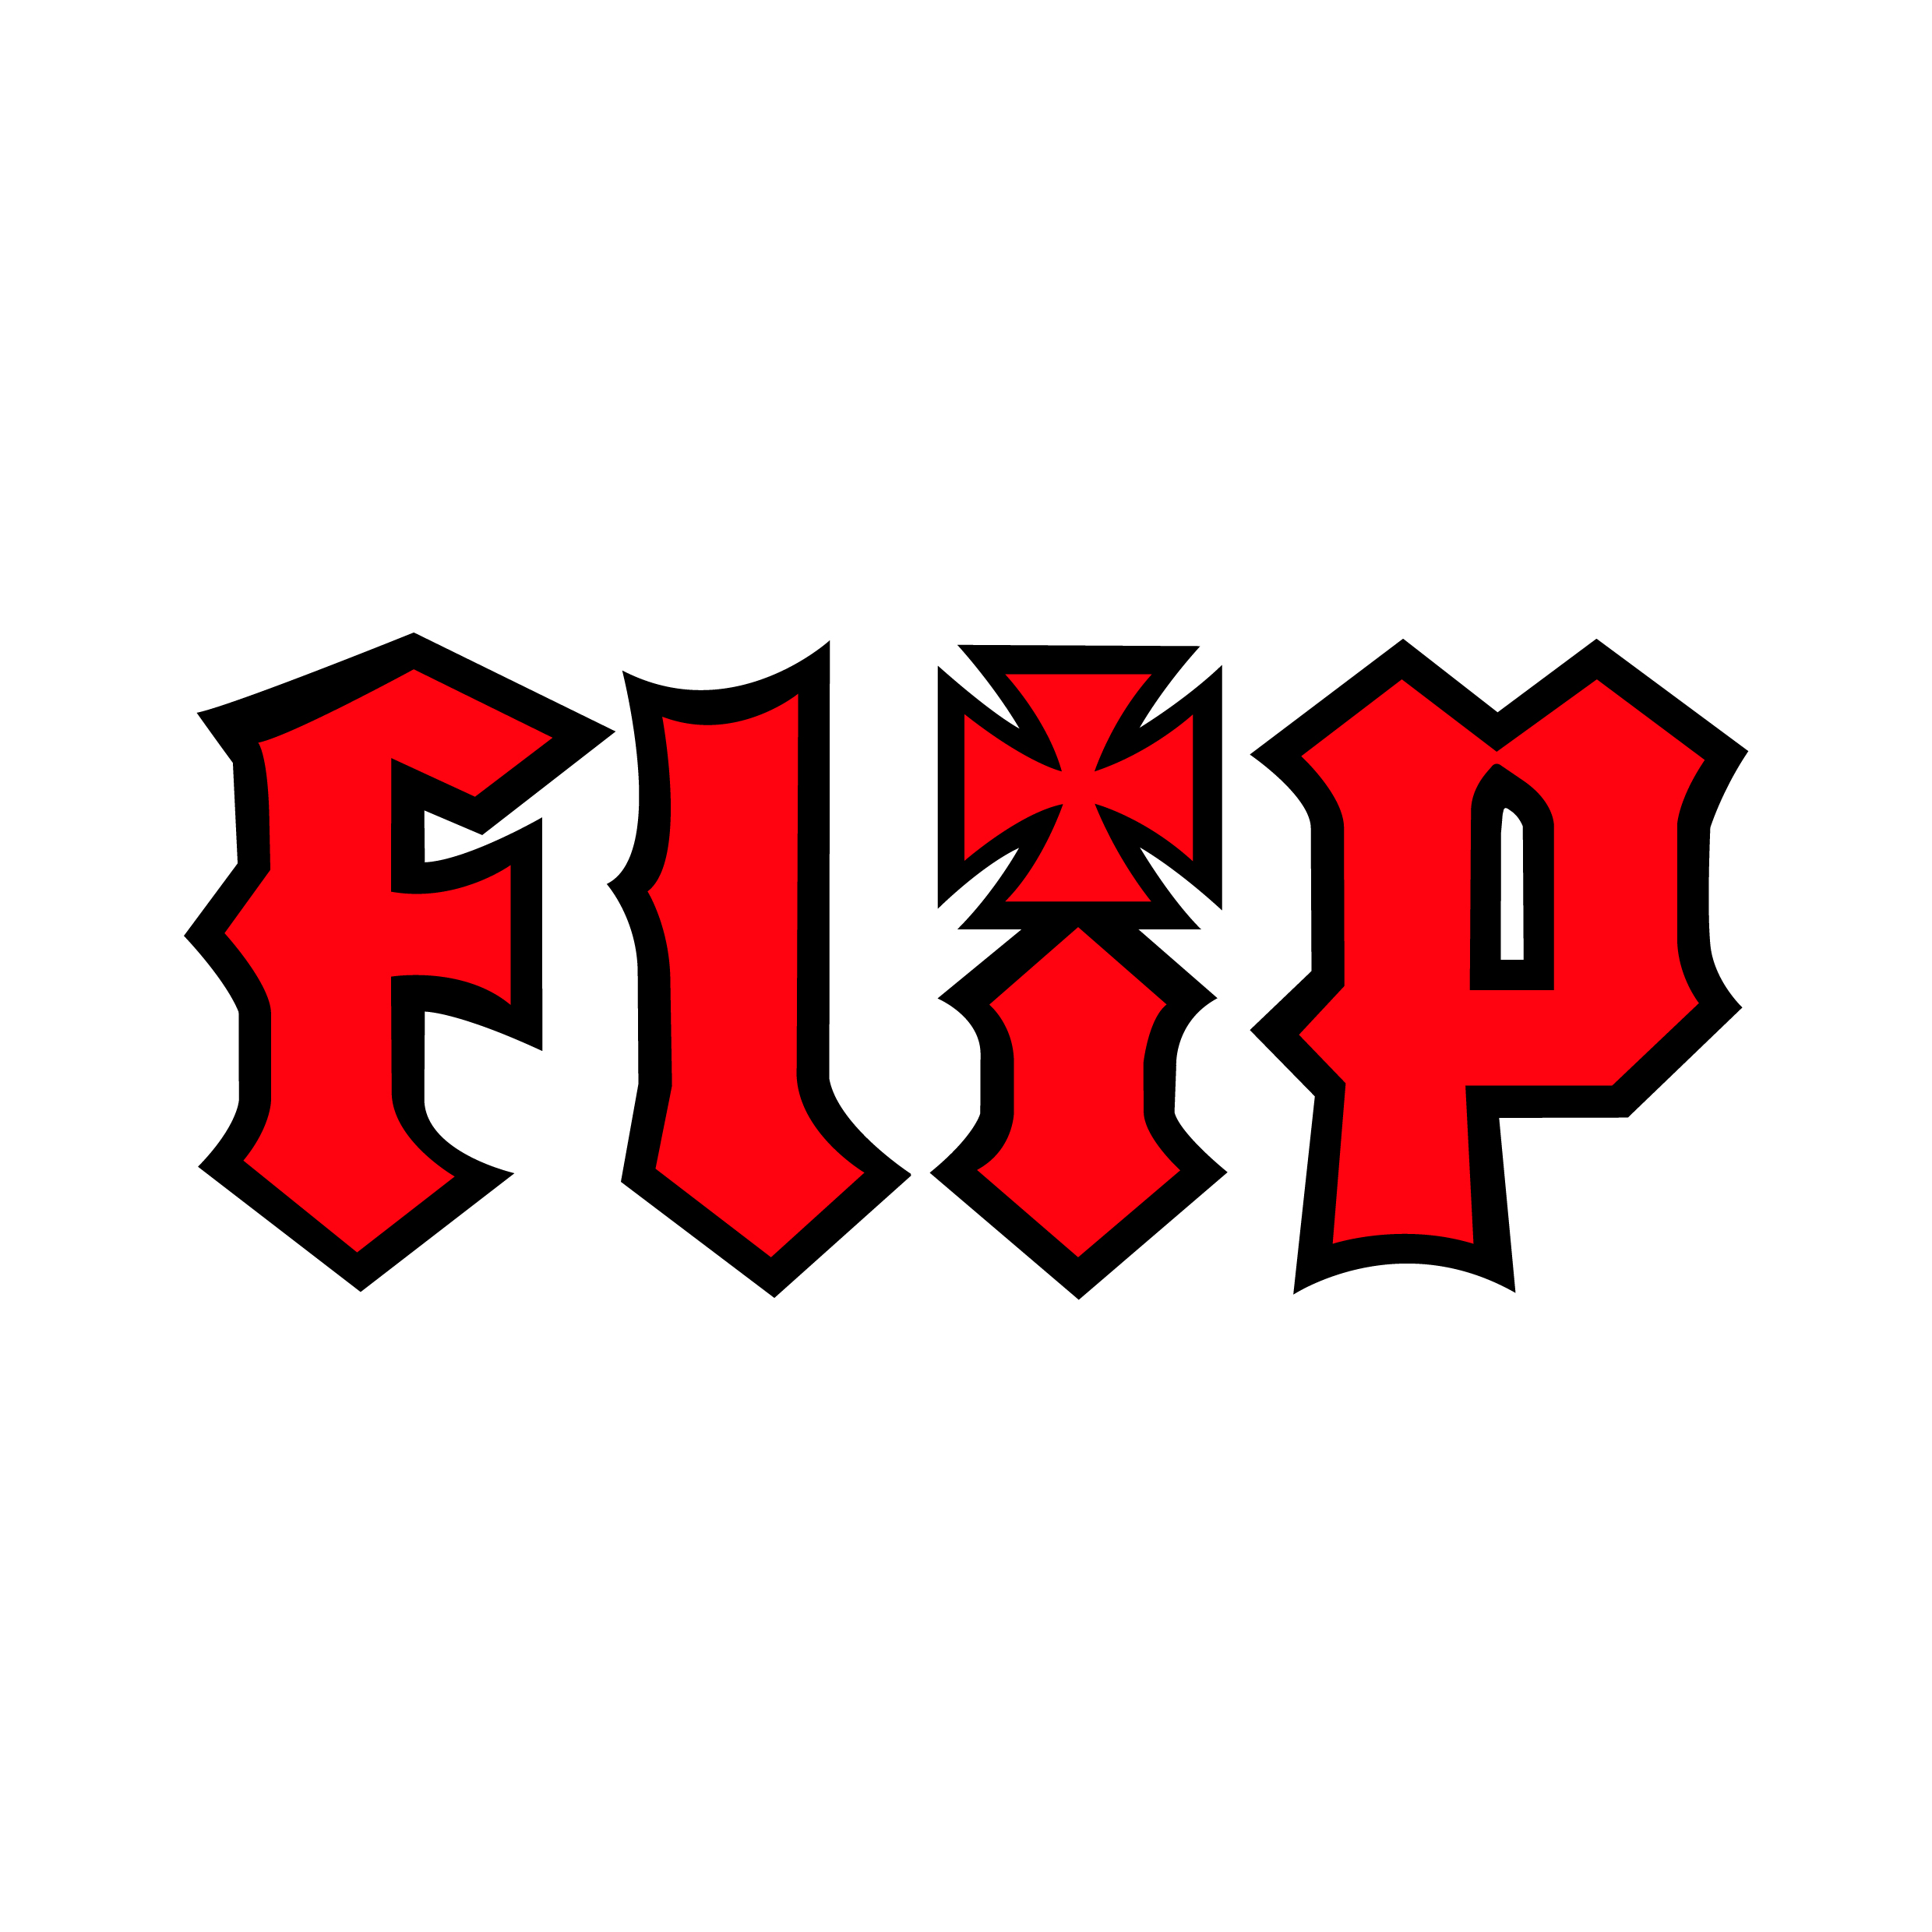 stickers-FLIP-ref1-skate-skateboard-sport-extreme-autocollant-sticker-auto-planche-autocollants-decals-sponsors-logo